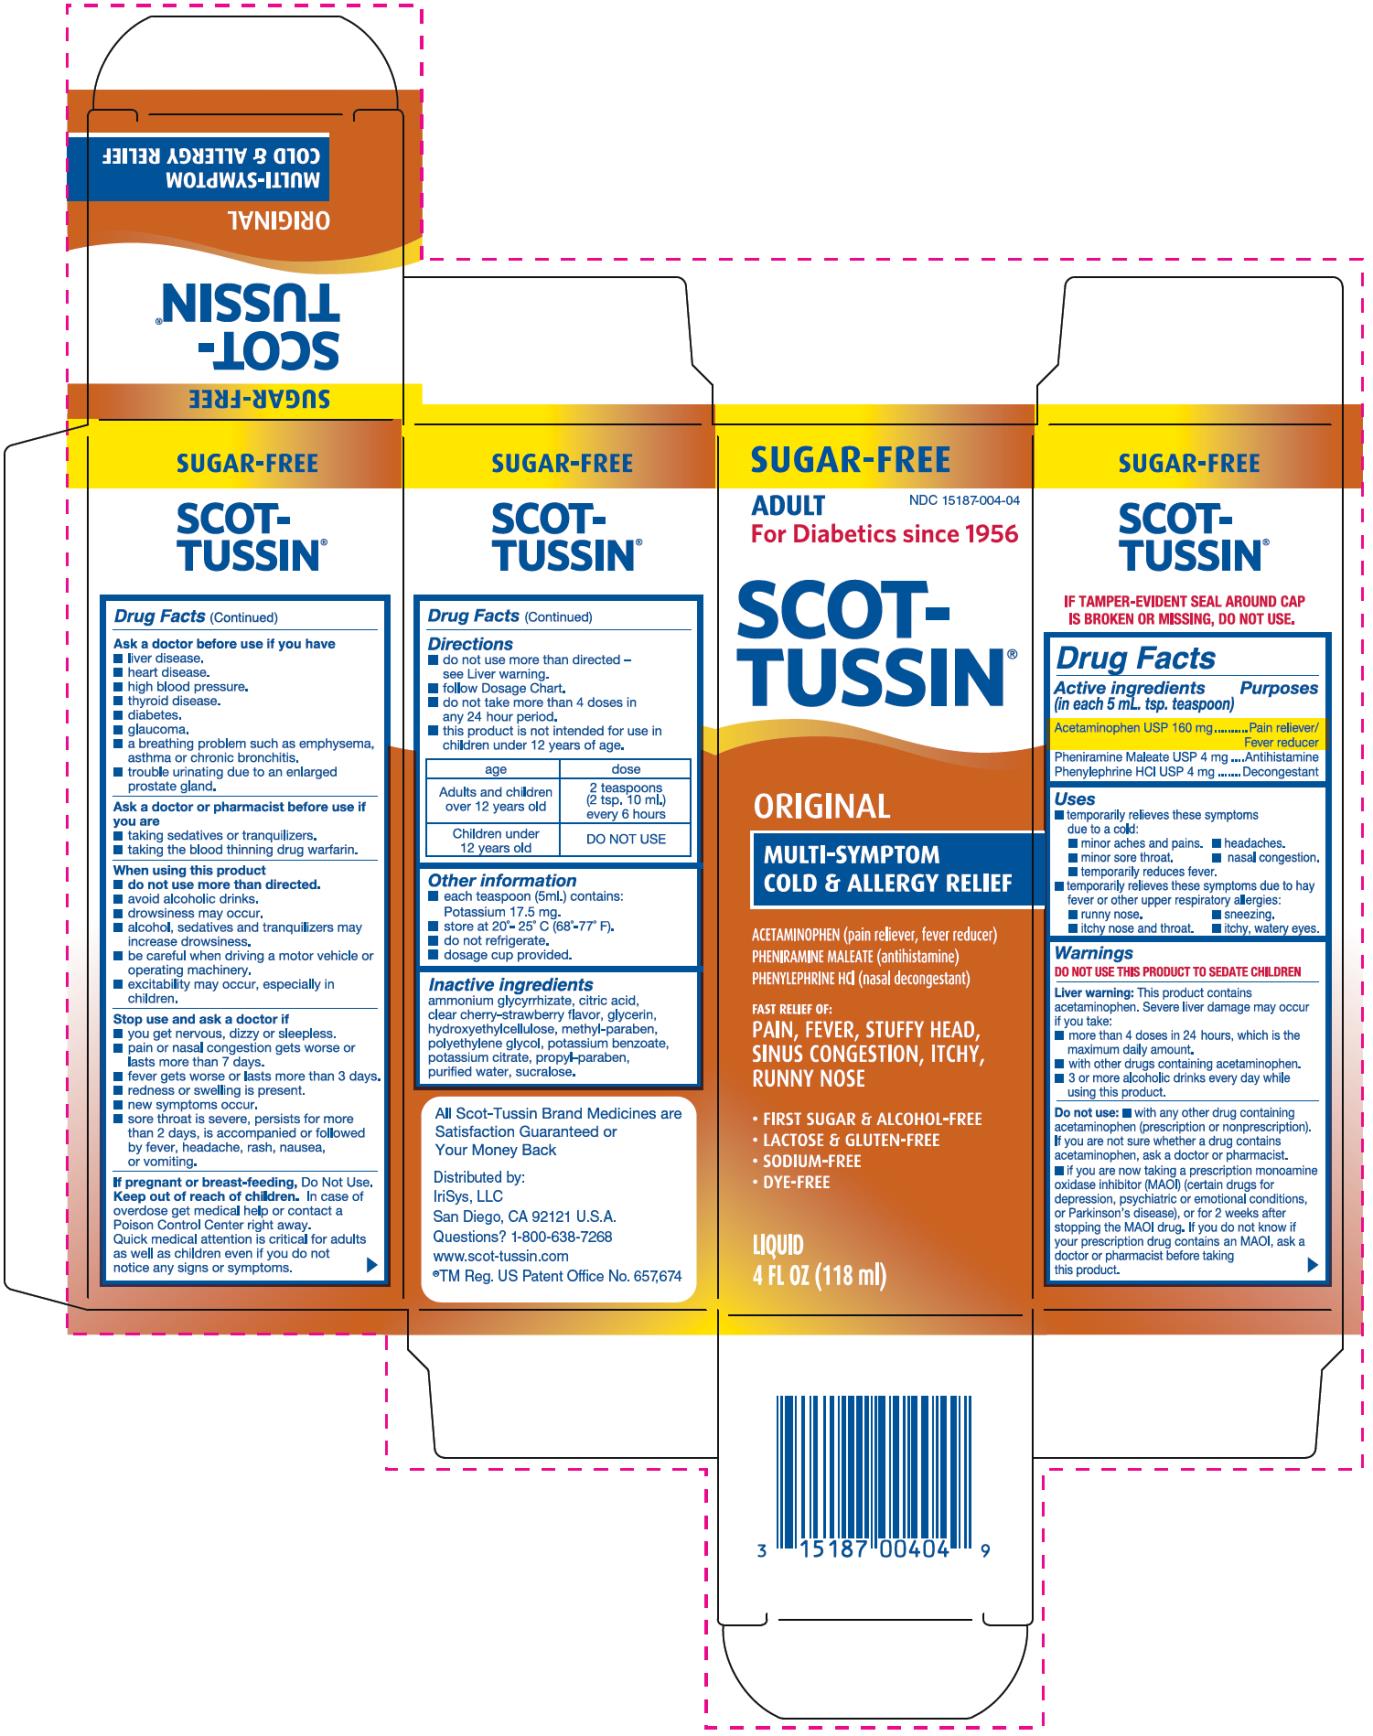 Scot-tussin Original Multi-symptom Cold And Allergy Relief while Breastfeeding